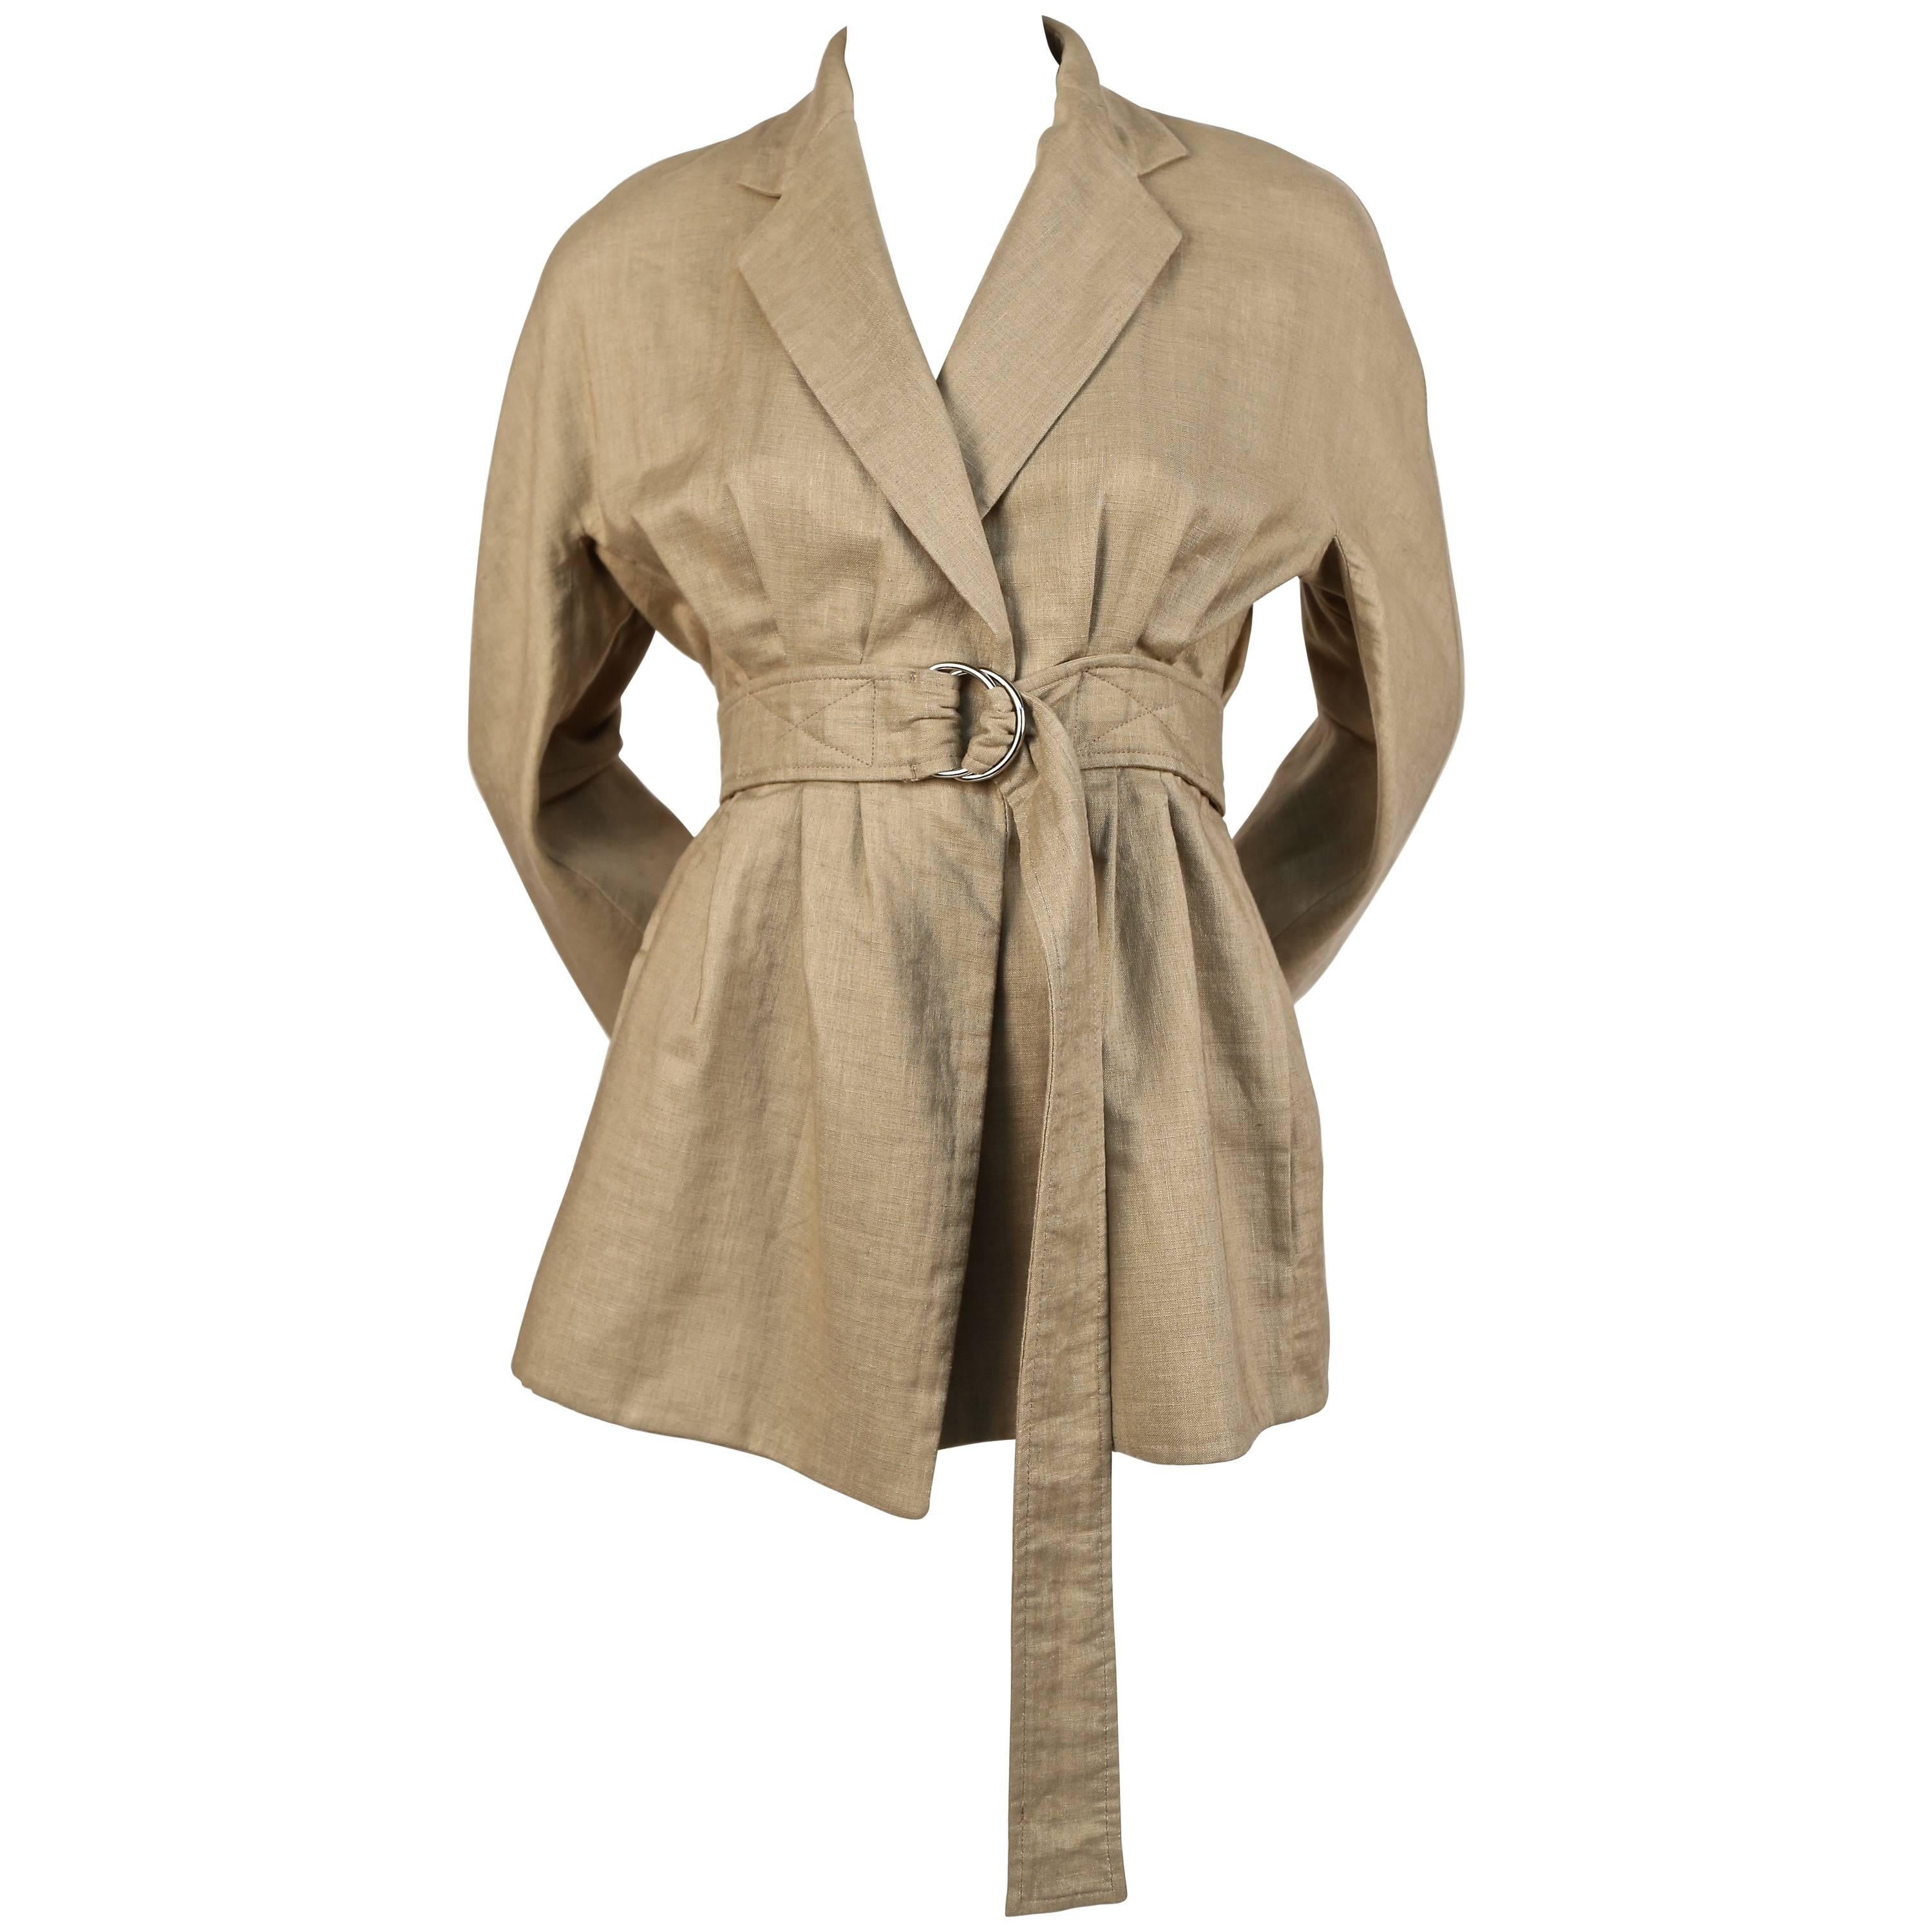 CELINE by Phoebe Philo tan linen jacket with high waist belt